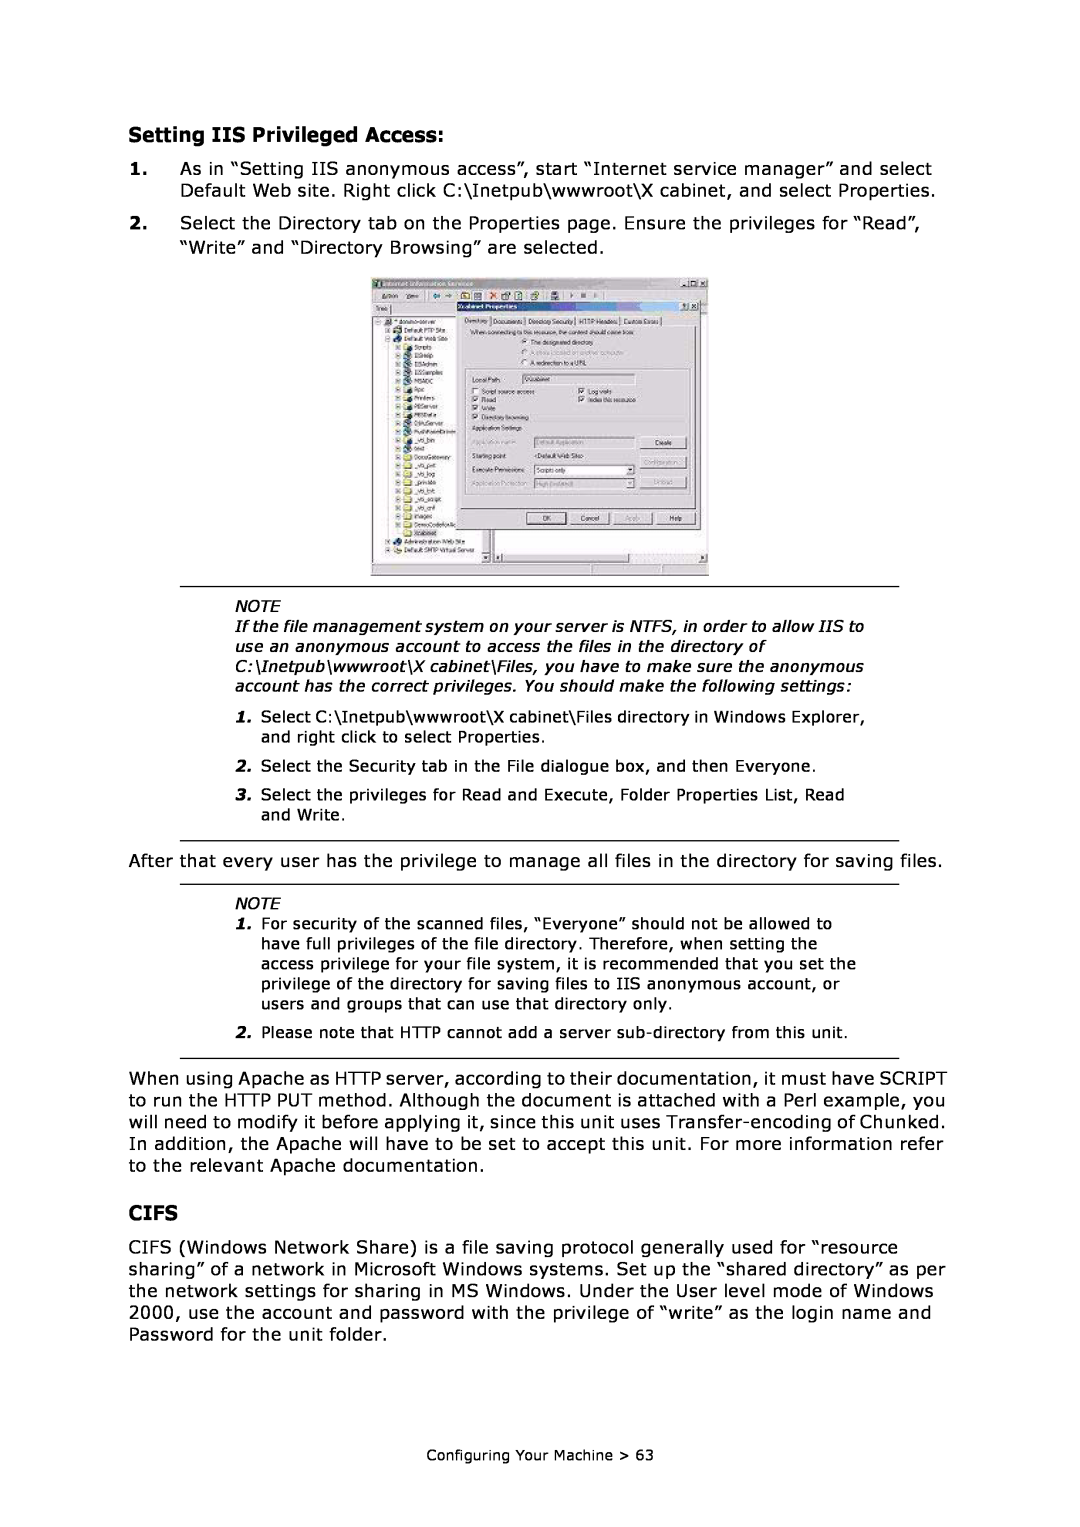 Oki MC860n MFP manual Setting IIS Privileged Access, Cifs 